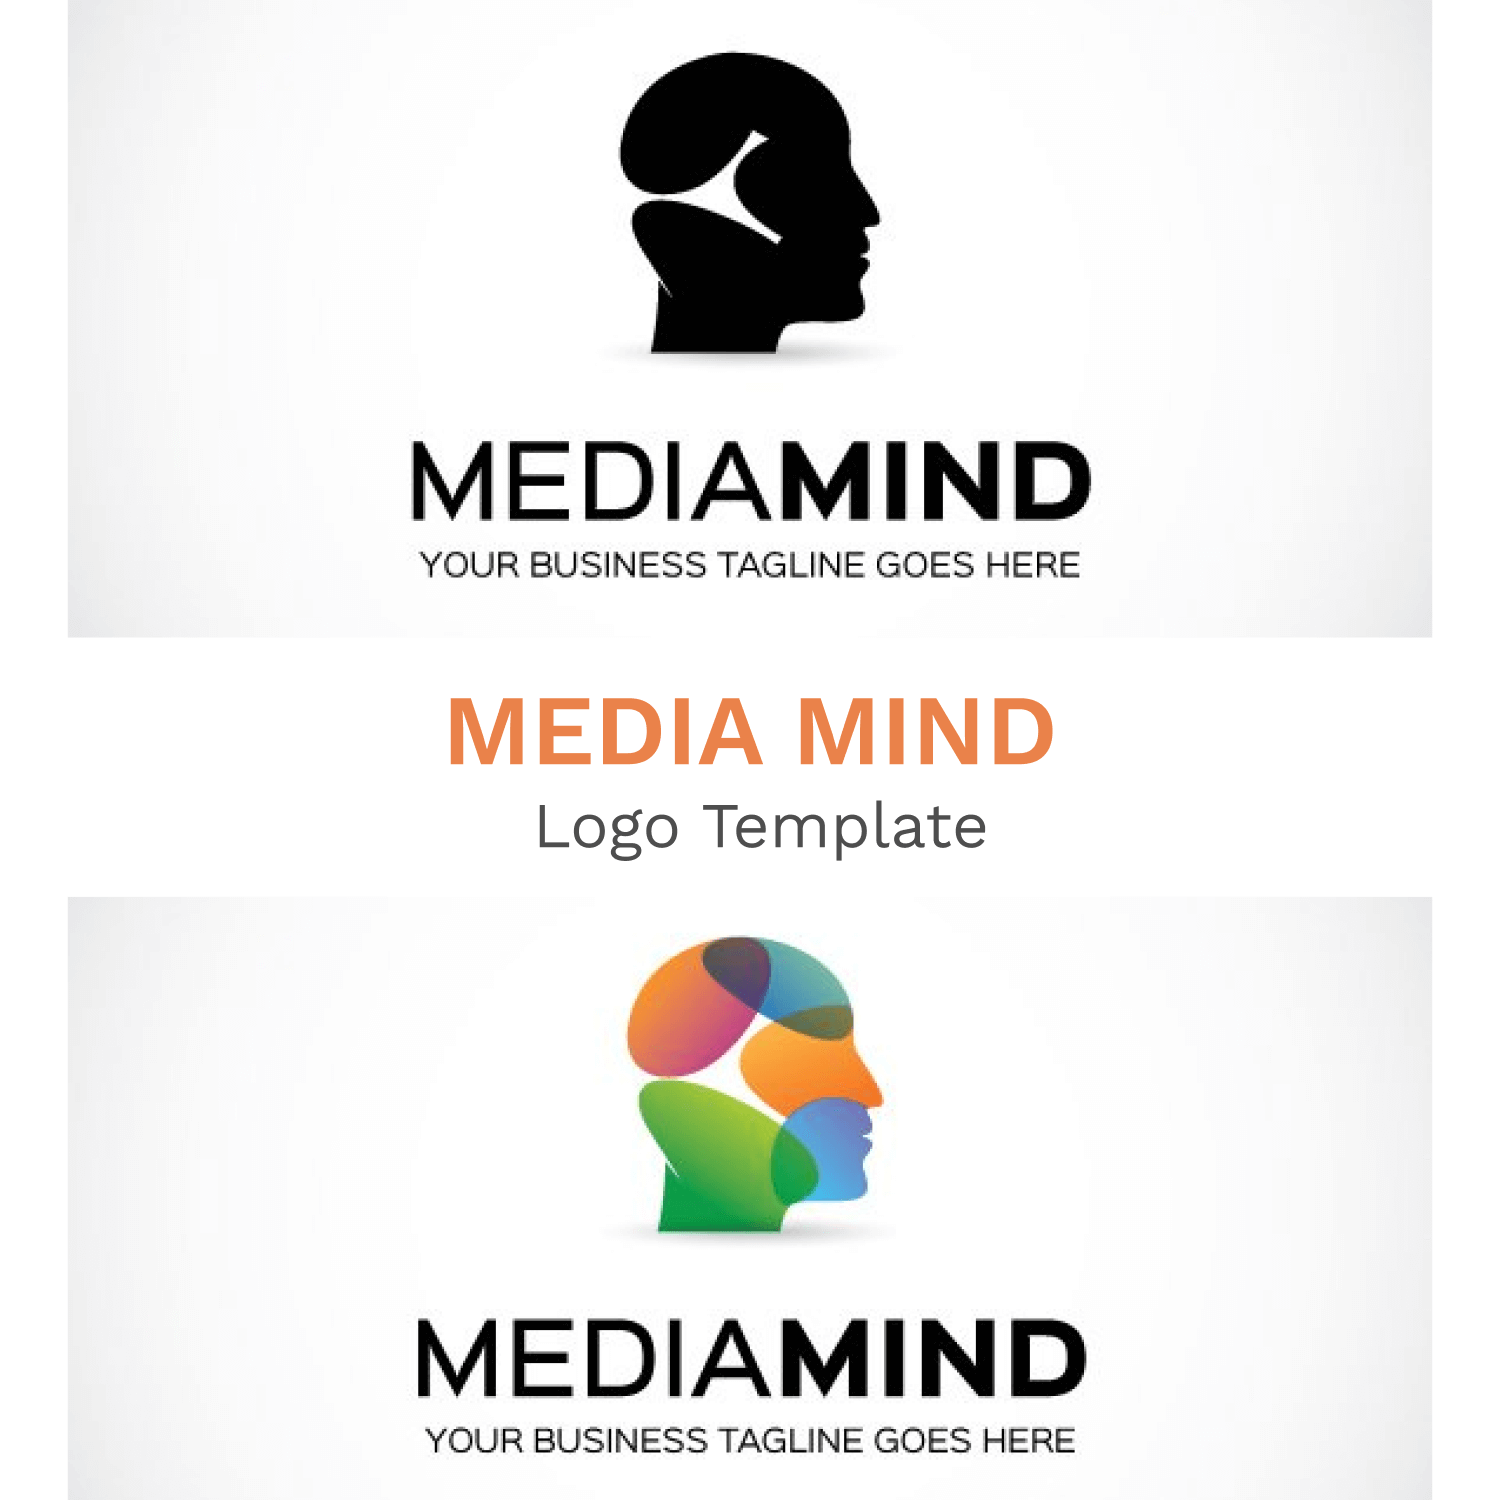 Media mind logo template.